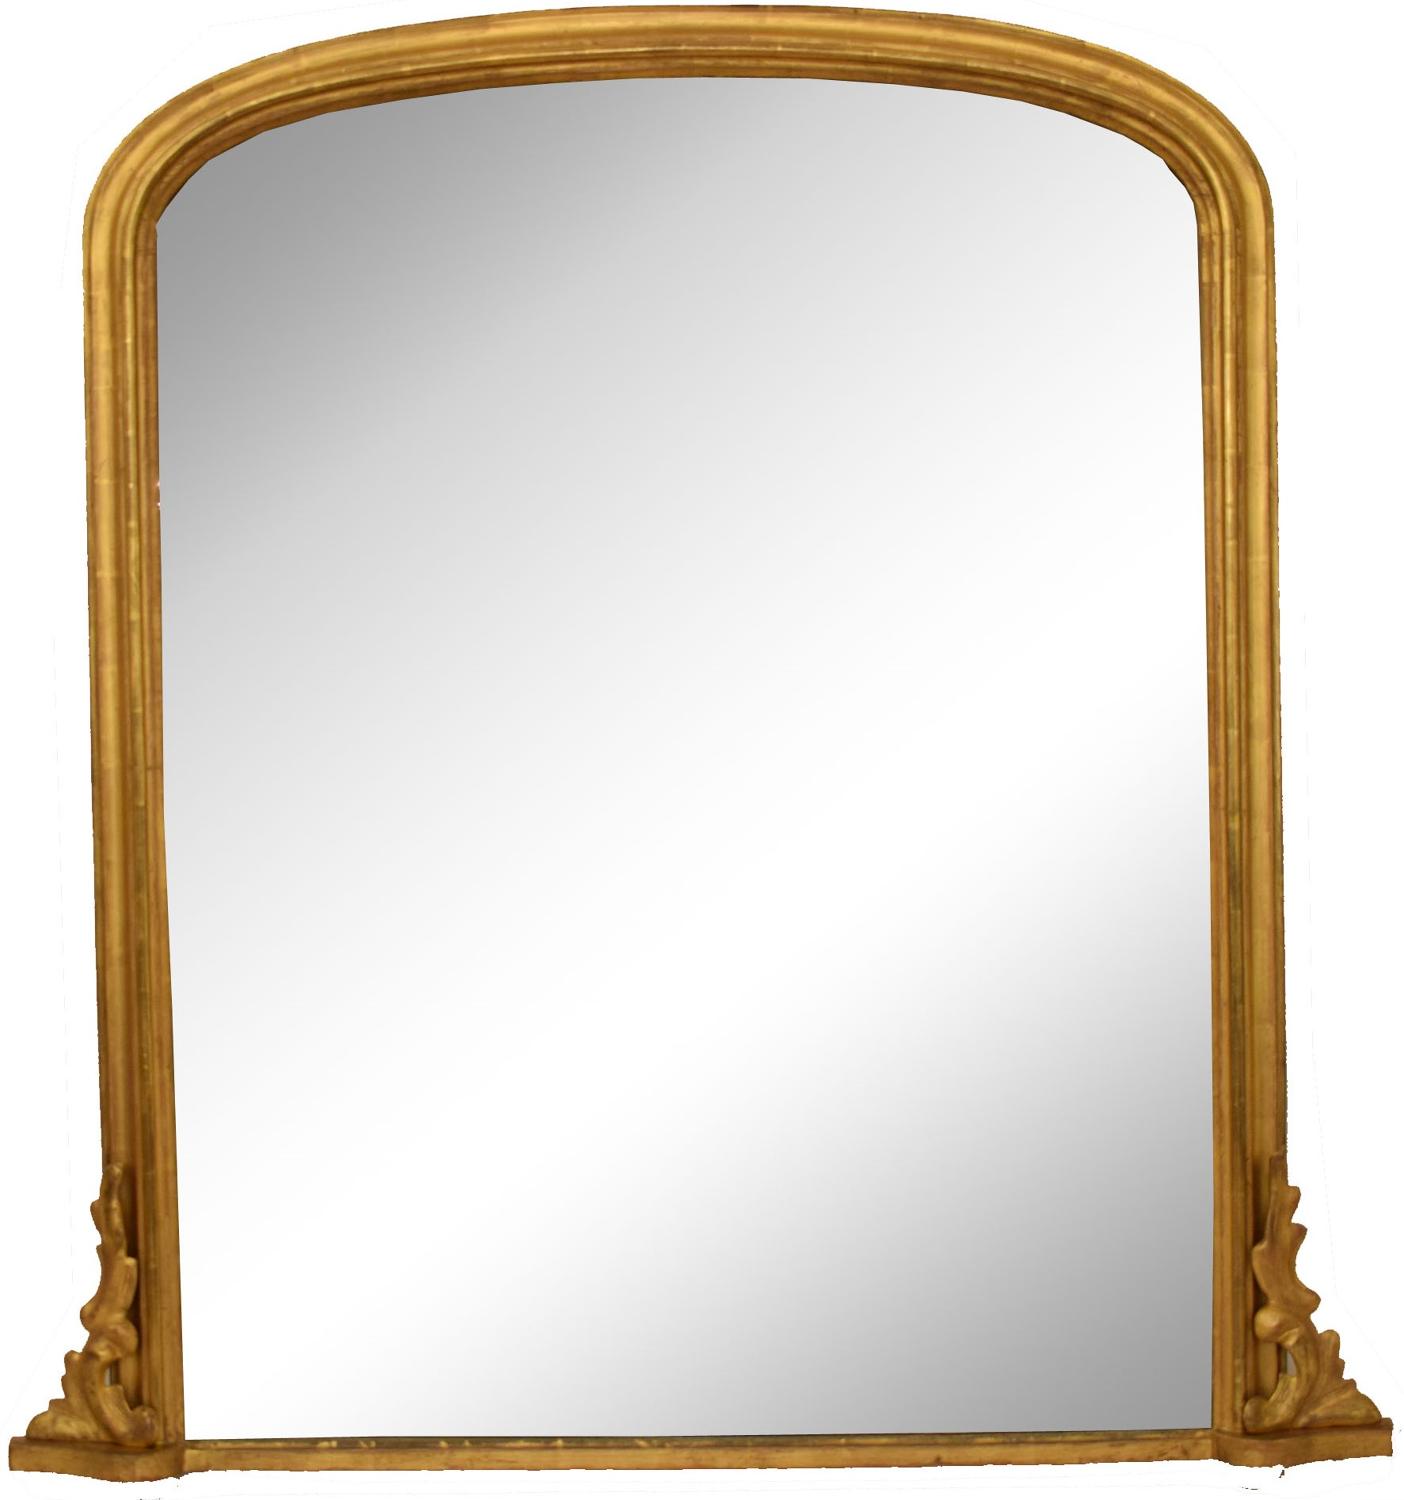 Antique gilded overmantle mirror